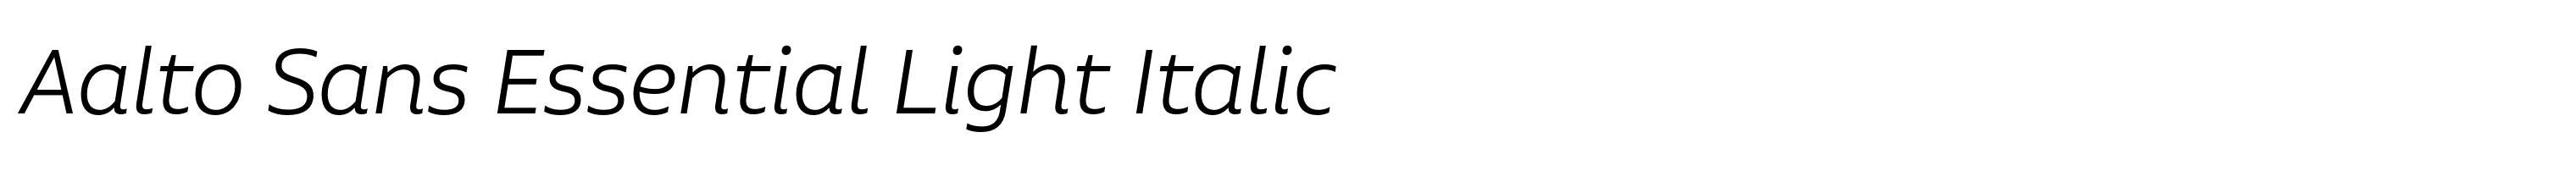 Aalto Sans Essential Light Italic